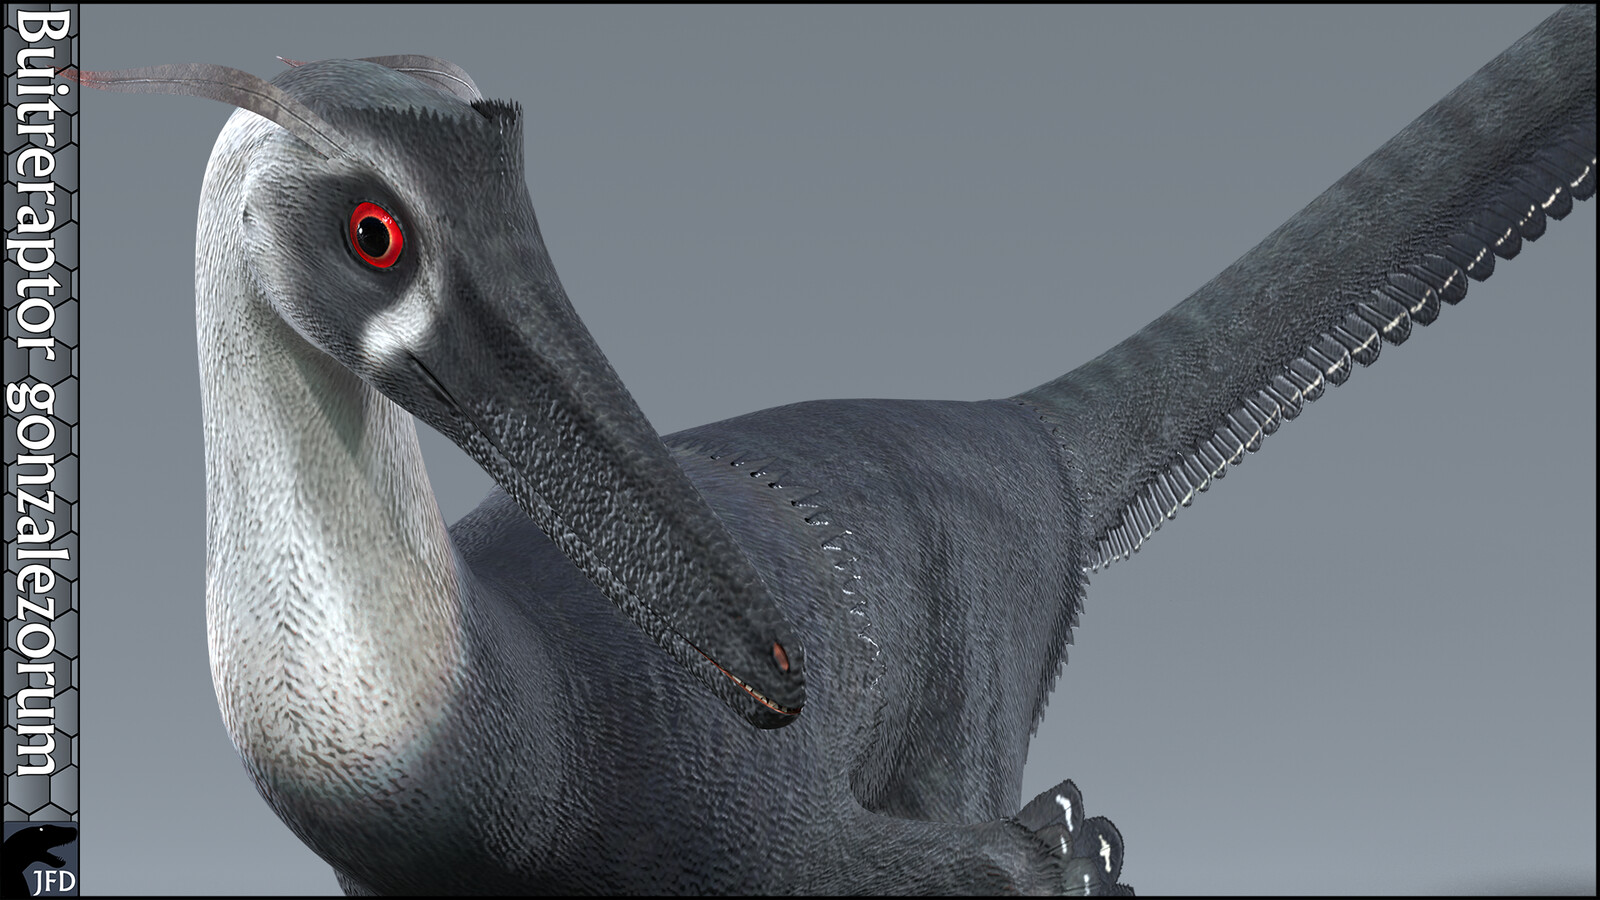 Buitreraptor gonzalezorum face closeup.